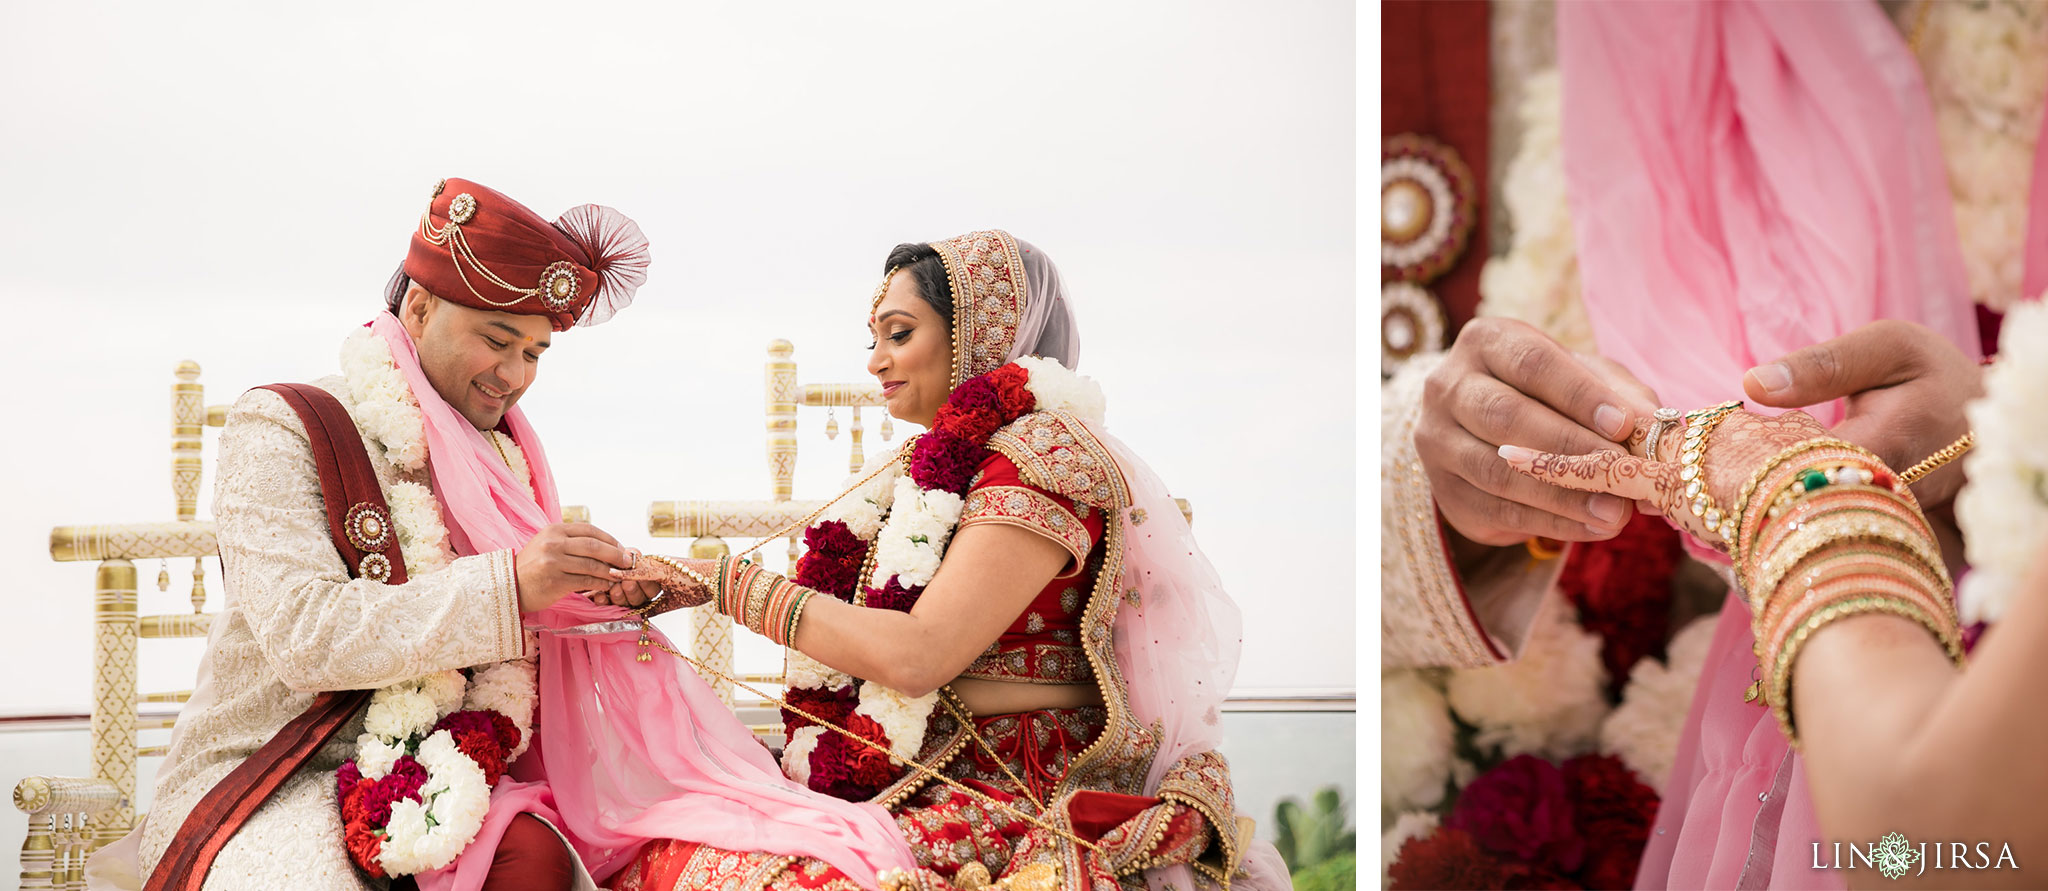 27 loews coronado bay resort indian wedding ceremony photography